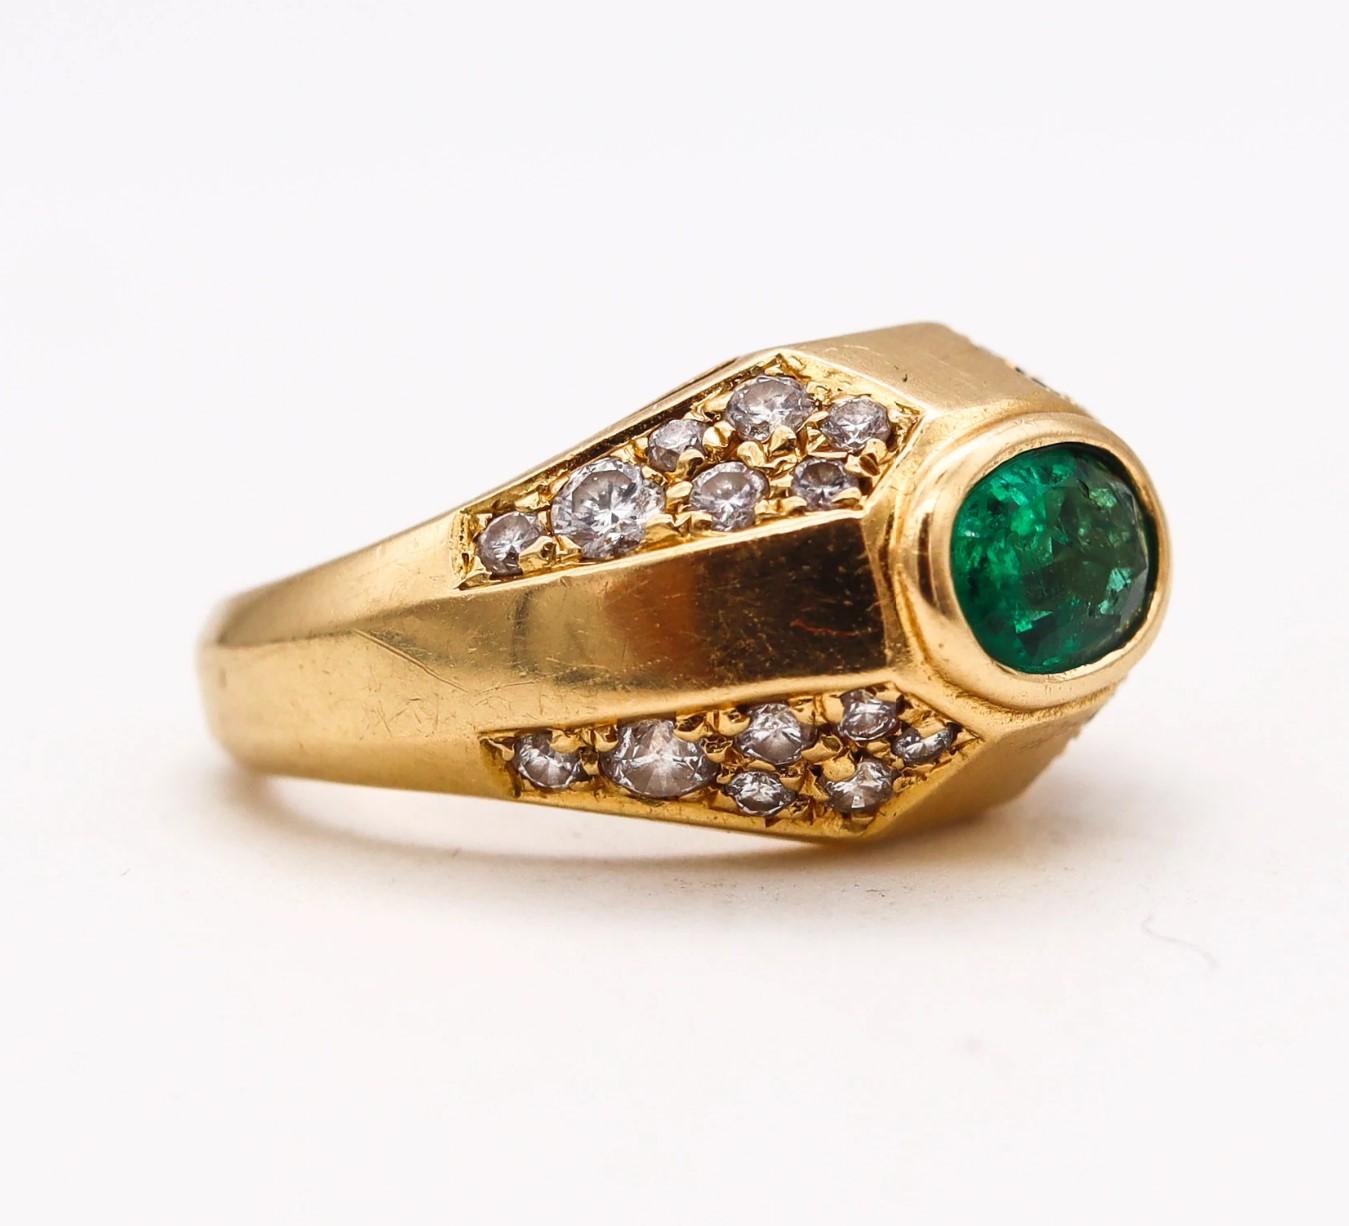 Oval Cut Bvlgari Roma Trombino Ring in 18Kt Yellow Gold with 1.82 Cts Emerald & Diamonds